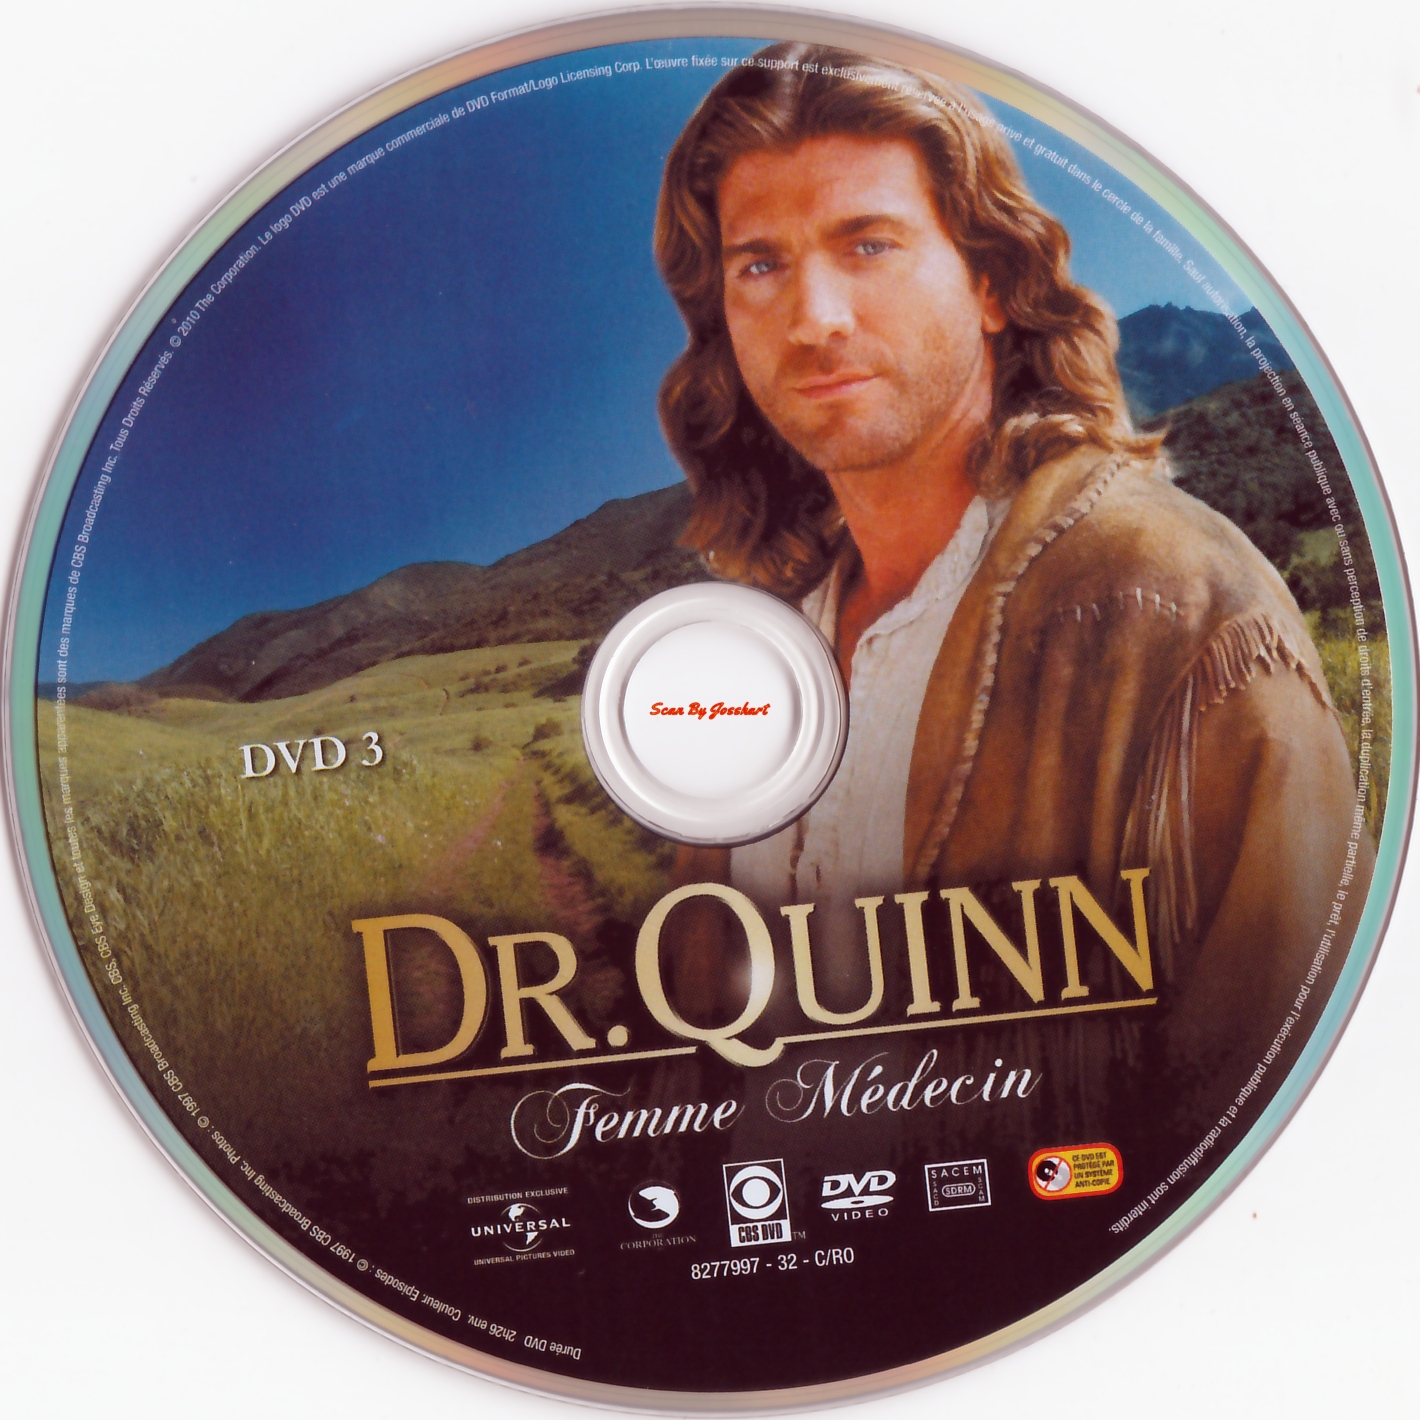 Docteur Quinn femme mdecin - Integrale Saison 6 DISC 3